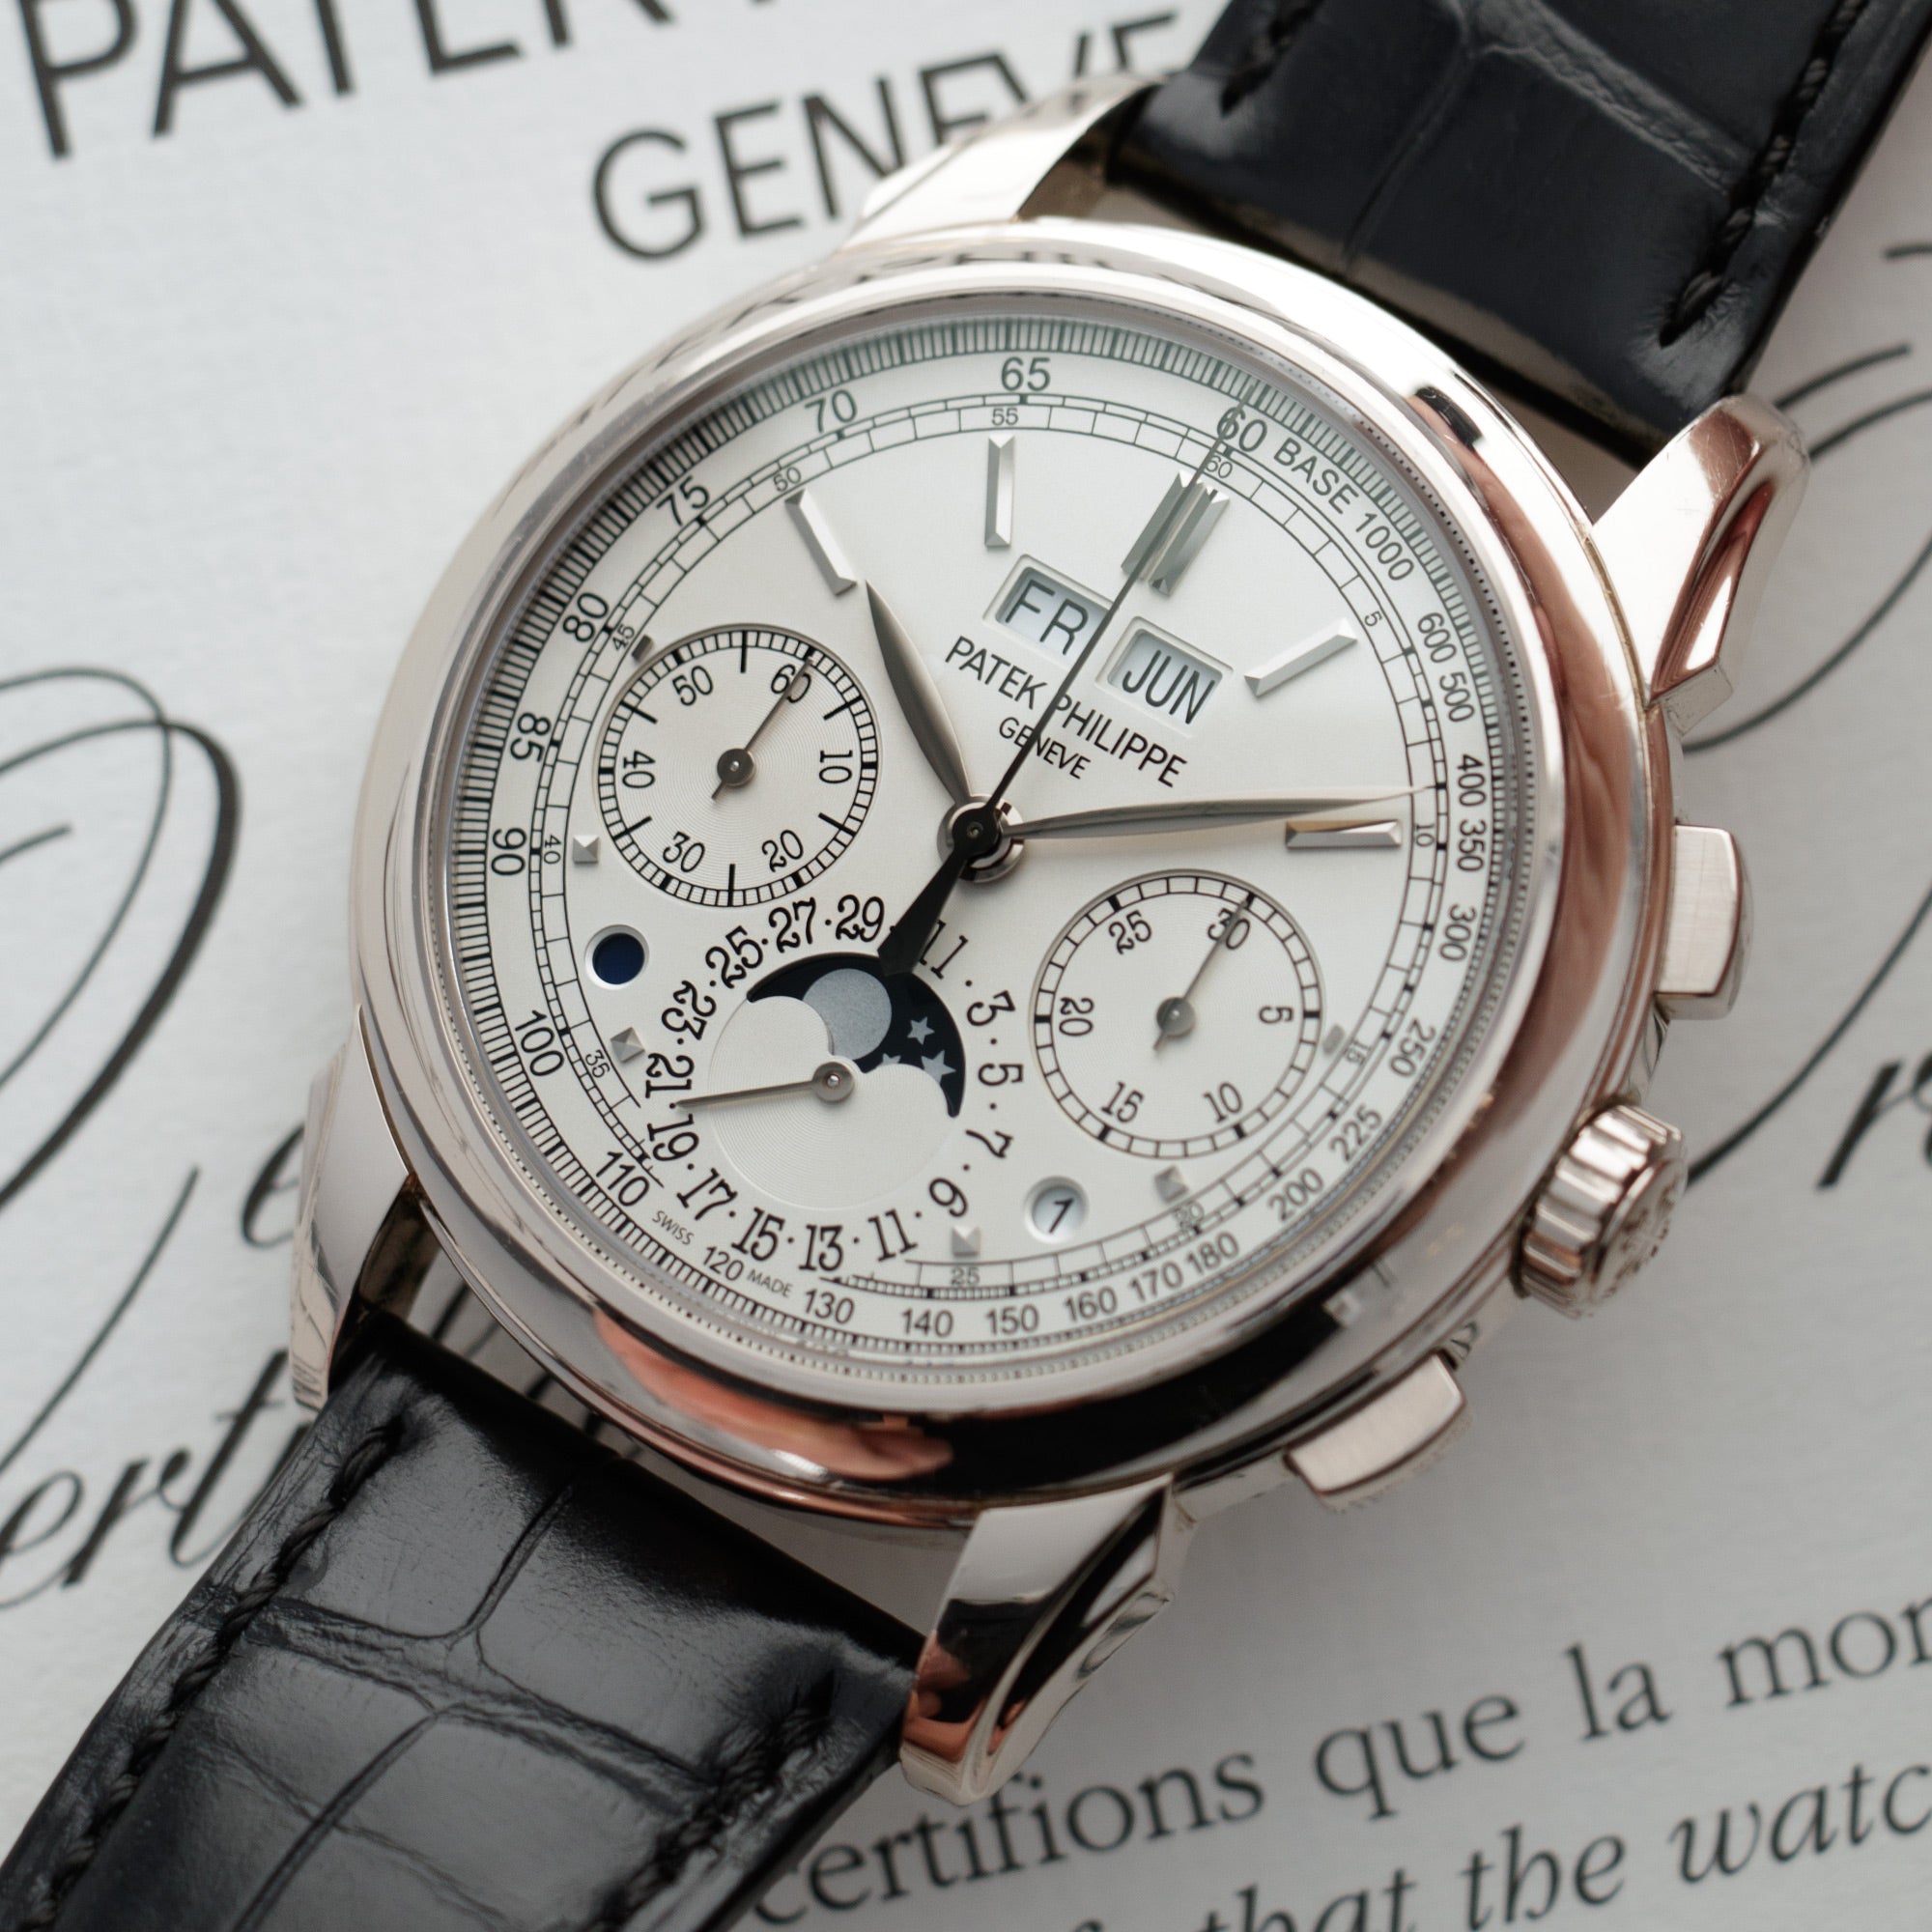 Patek Philippe - Patek Philippe White Gold Perpetual Calendar Chronograph Ref. 5270G-018 - The Keystone Watches